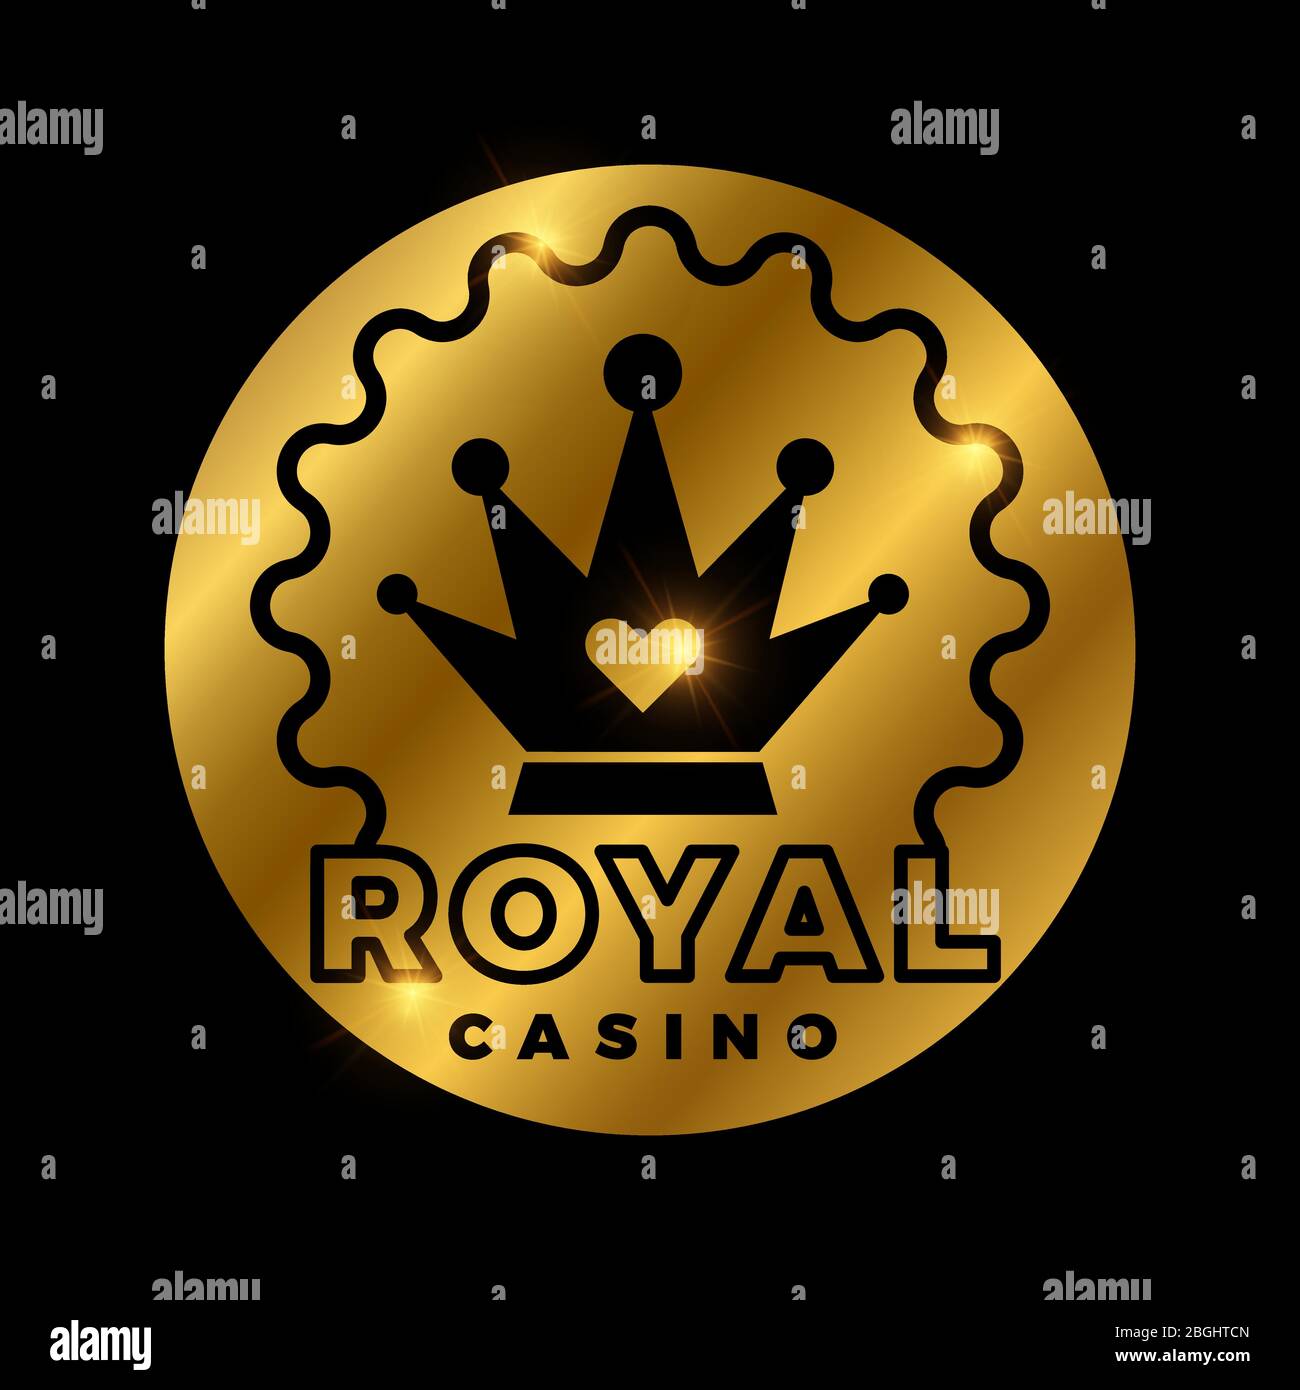 Royal casino golden vector design isolated on black. Vector illustration Stock Vector